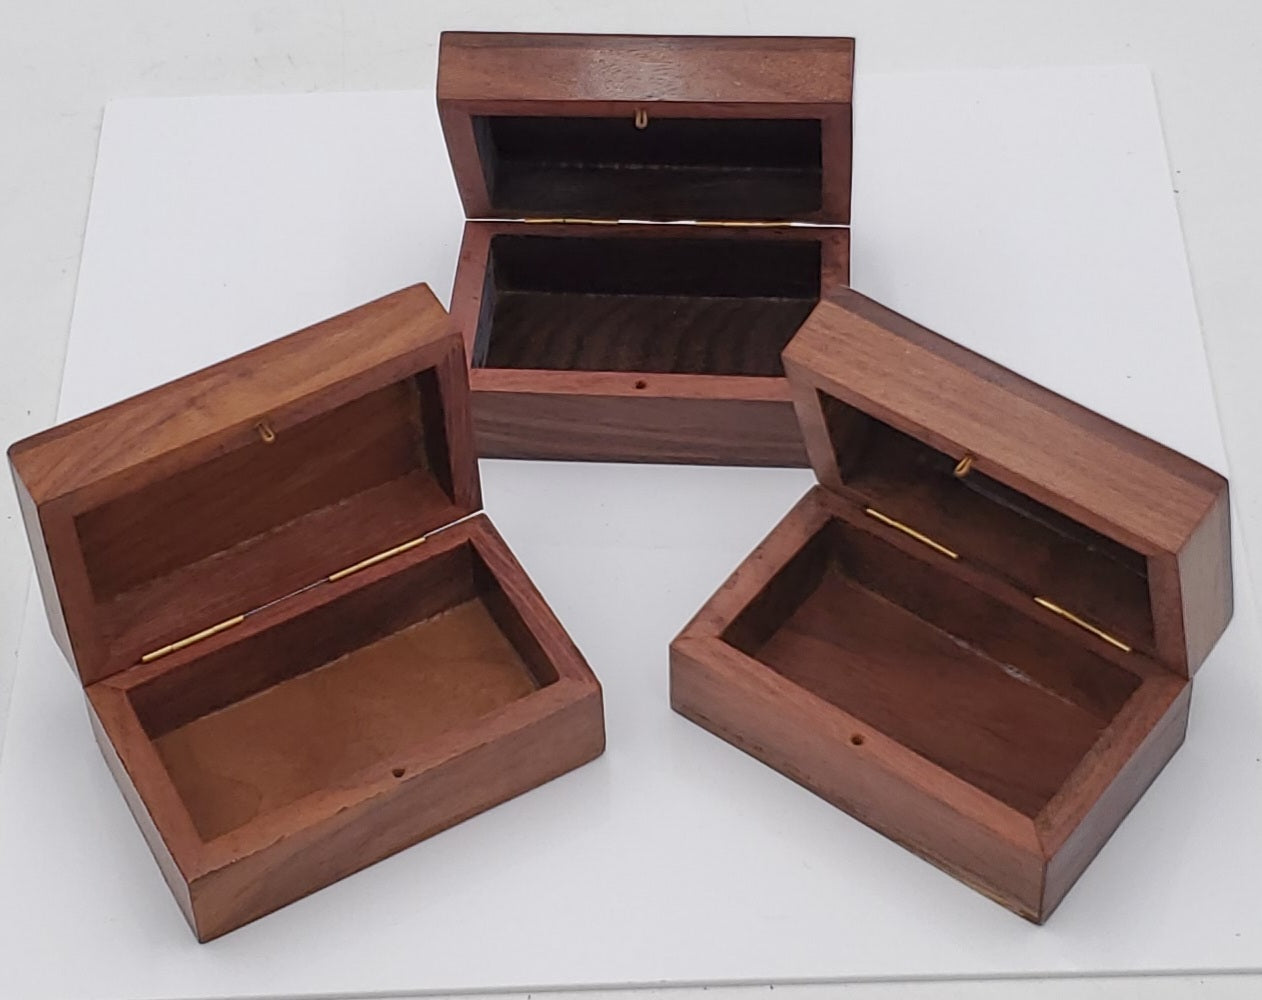 Wooden Carved Box/ Jewelry Box/ Trinket Box--4"x2.5"